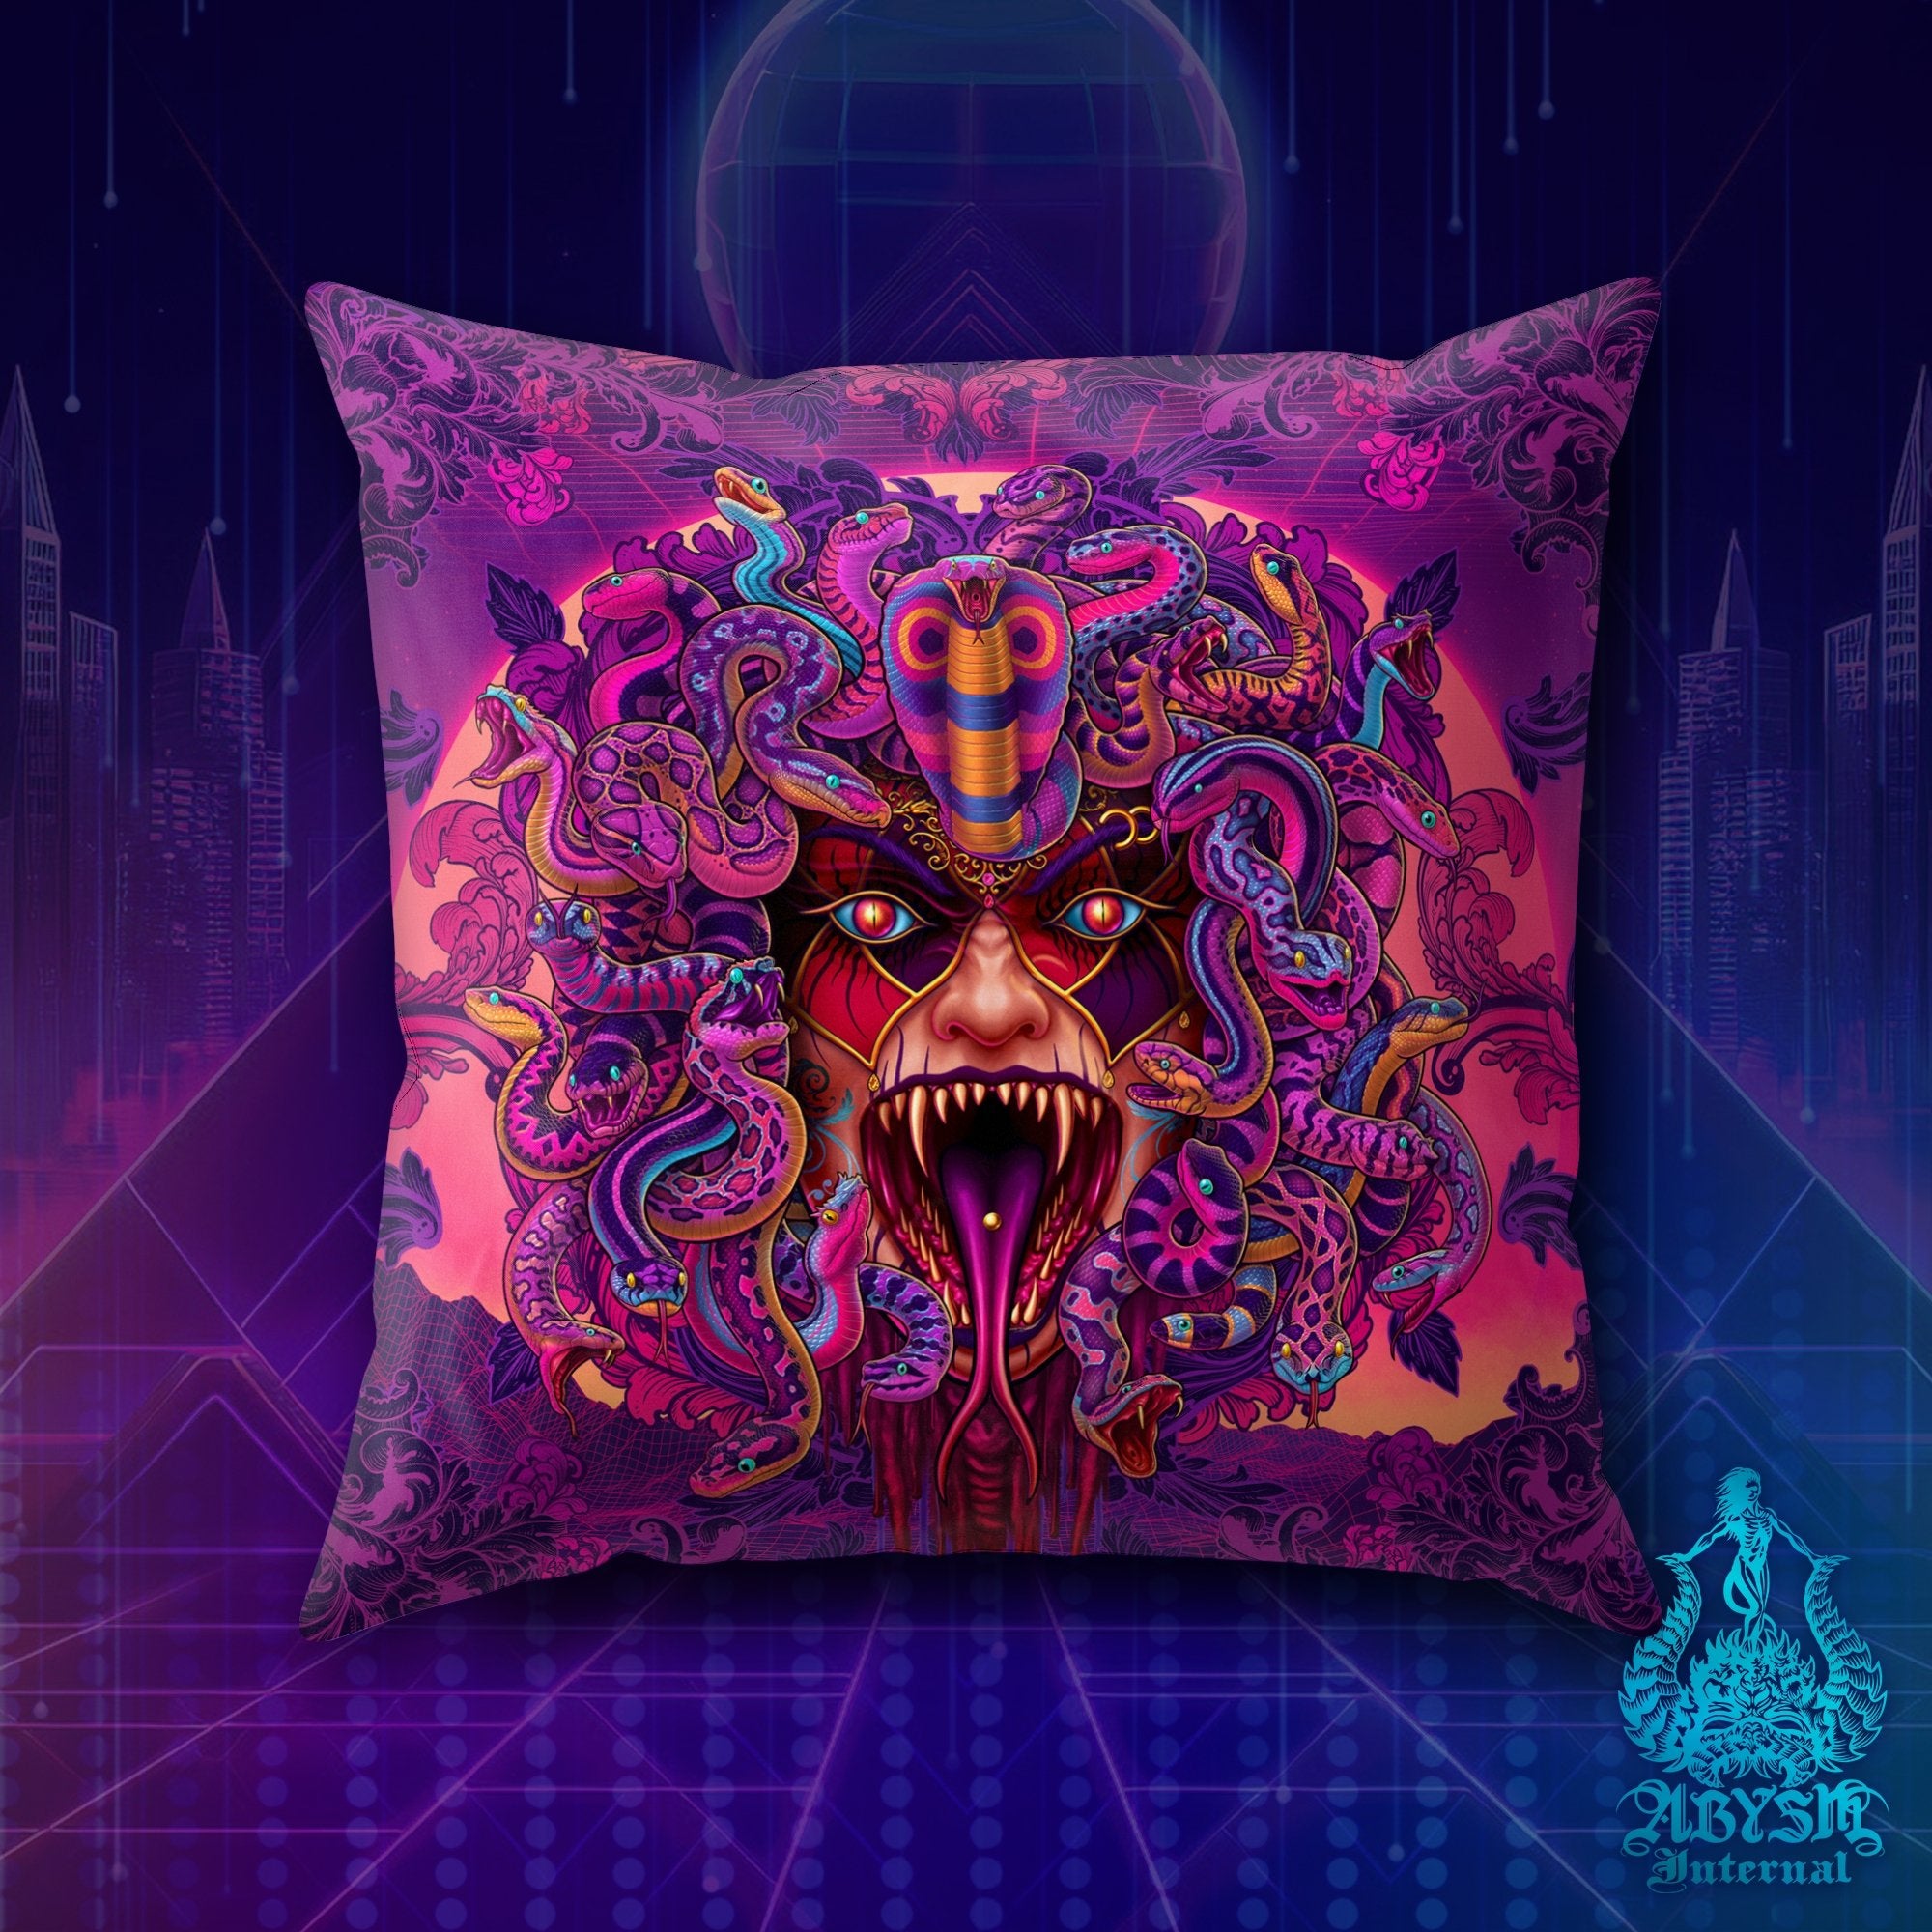 Psychedelic Throw Pillow, Vaporwave Decorative Accent Cushion, Retrowave 80s Room Decor, Synthwave Art Print - Medusa Rage - Abysm Internal